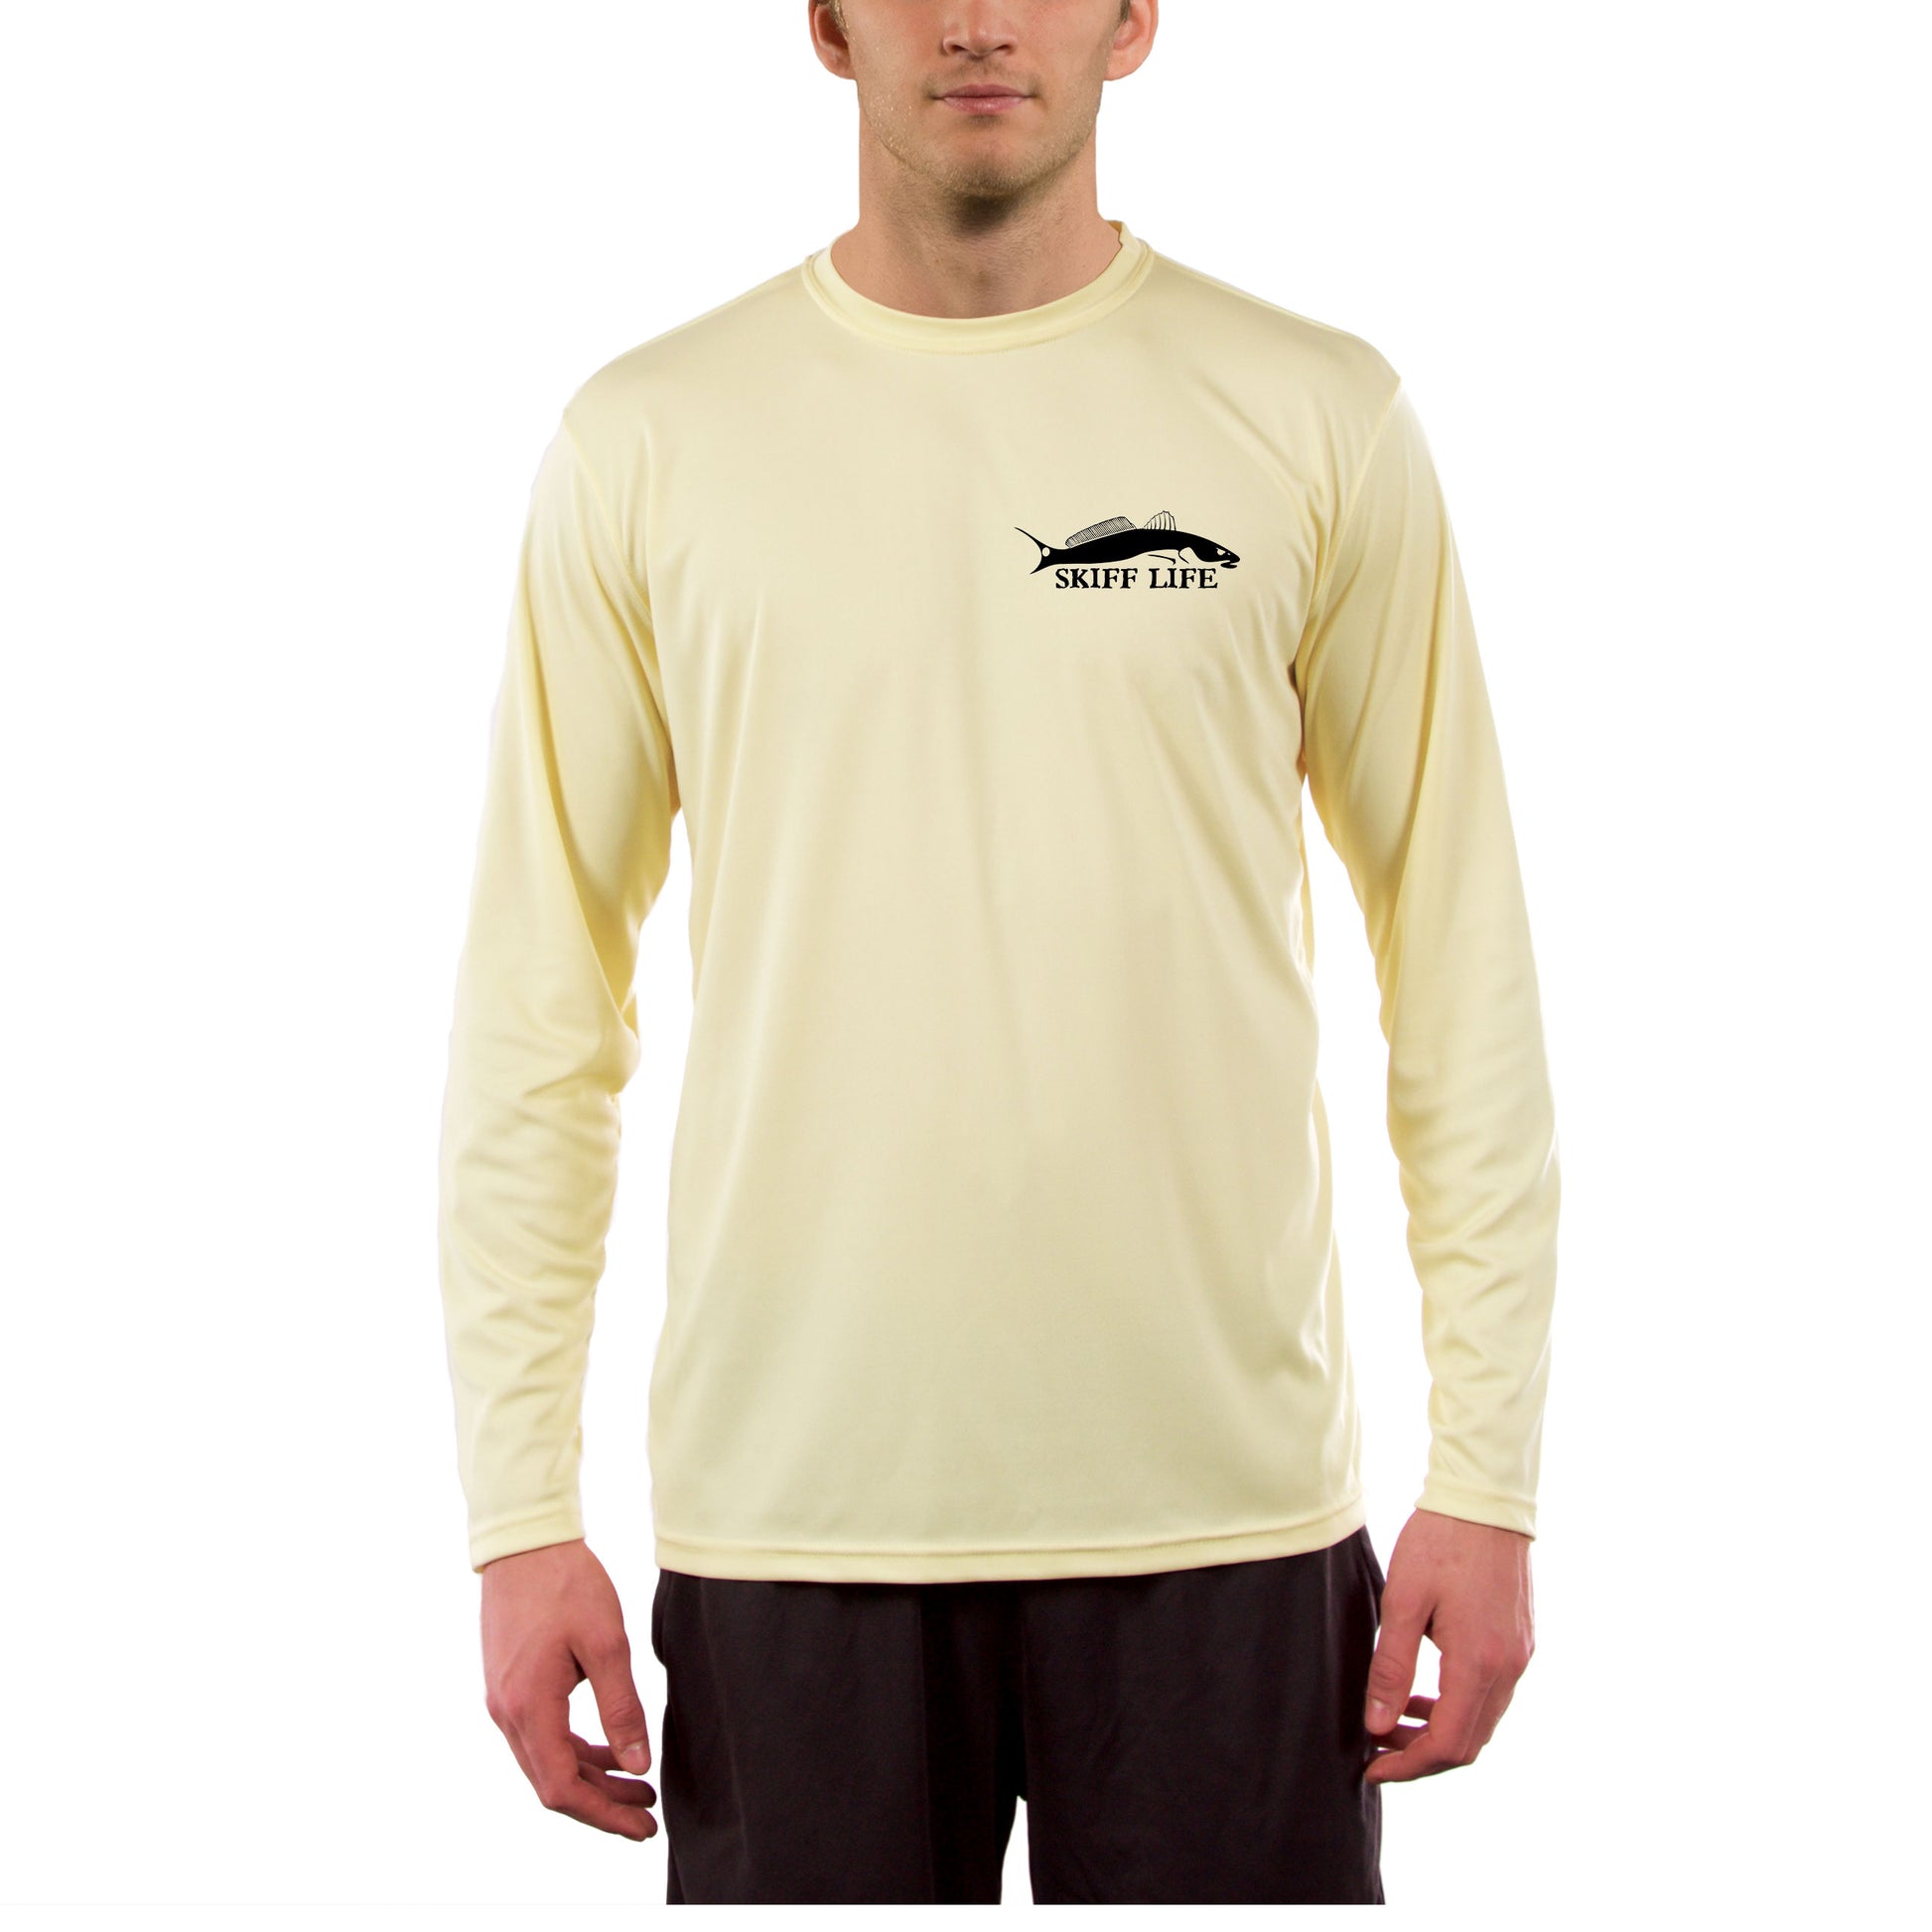 Tarpon Fly Fishing Shirt for Men by Pat Ford – Skiff Life